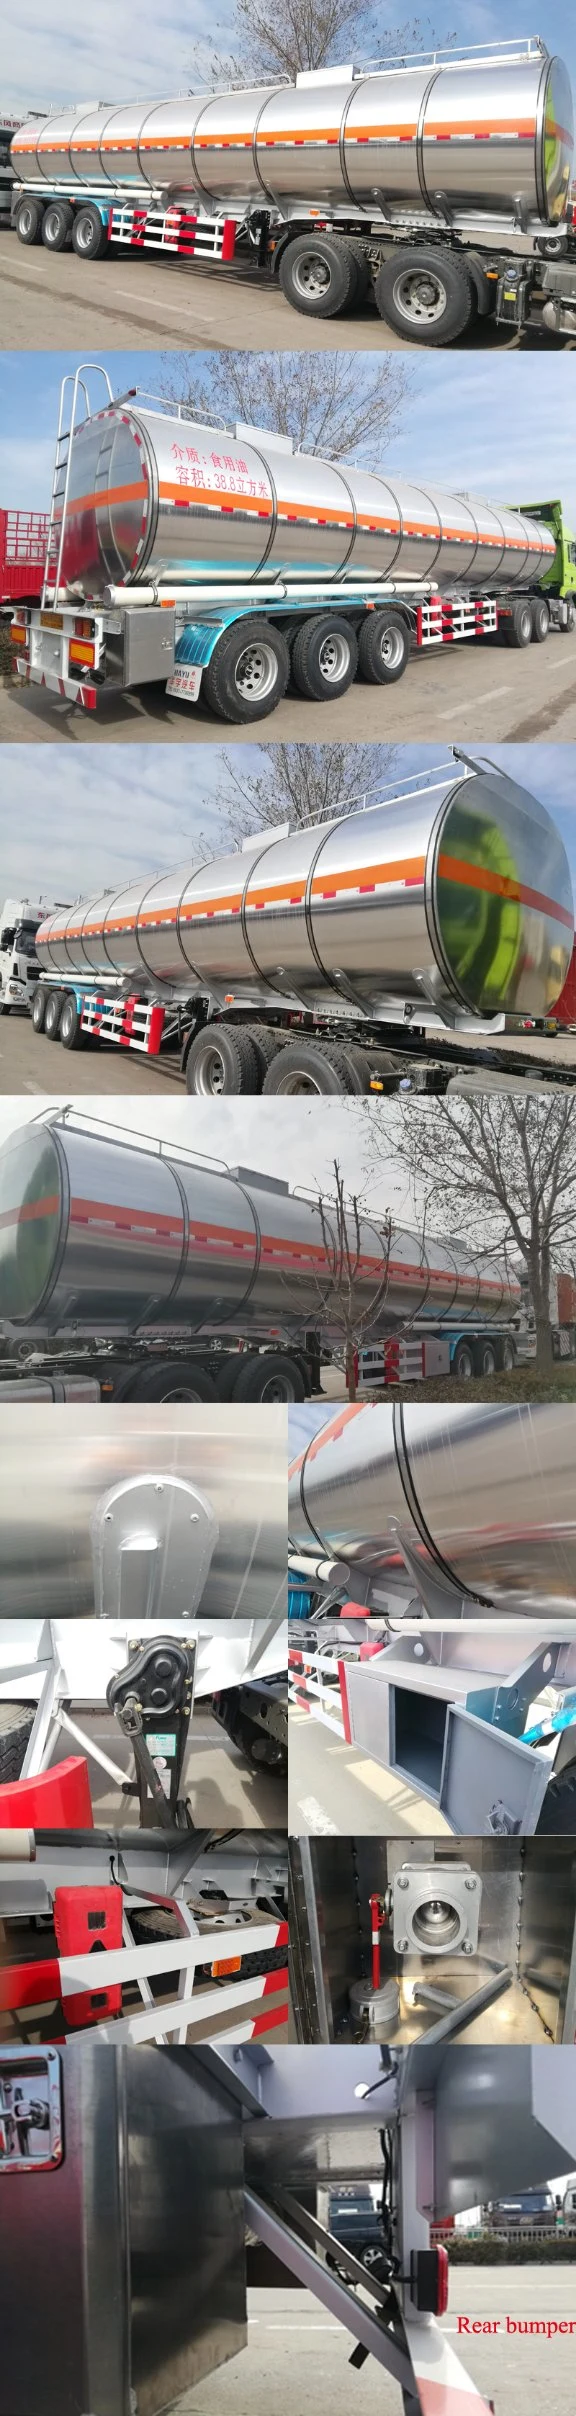 2/3 Axle Stainless Steel/Aluminum Alloy Tank/Tanker Truck Semi Trailer for Oil/Fuel/Diesel/Gasoline/Crude/Water/Milk Transport